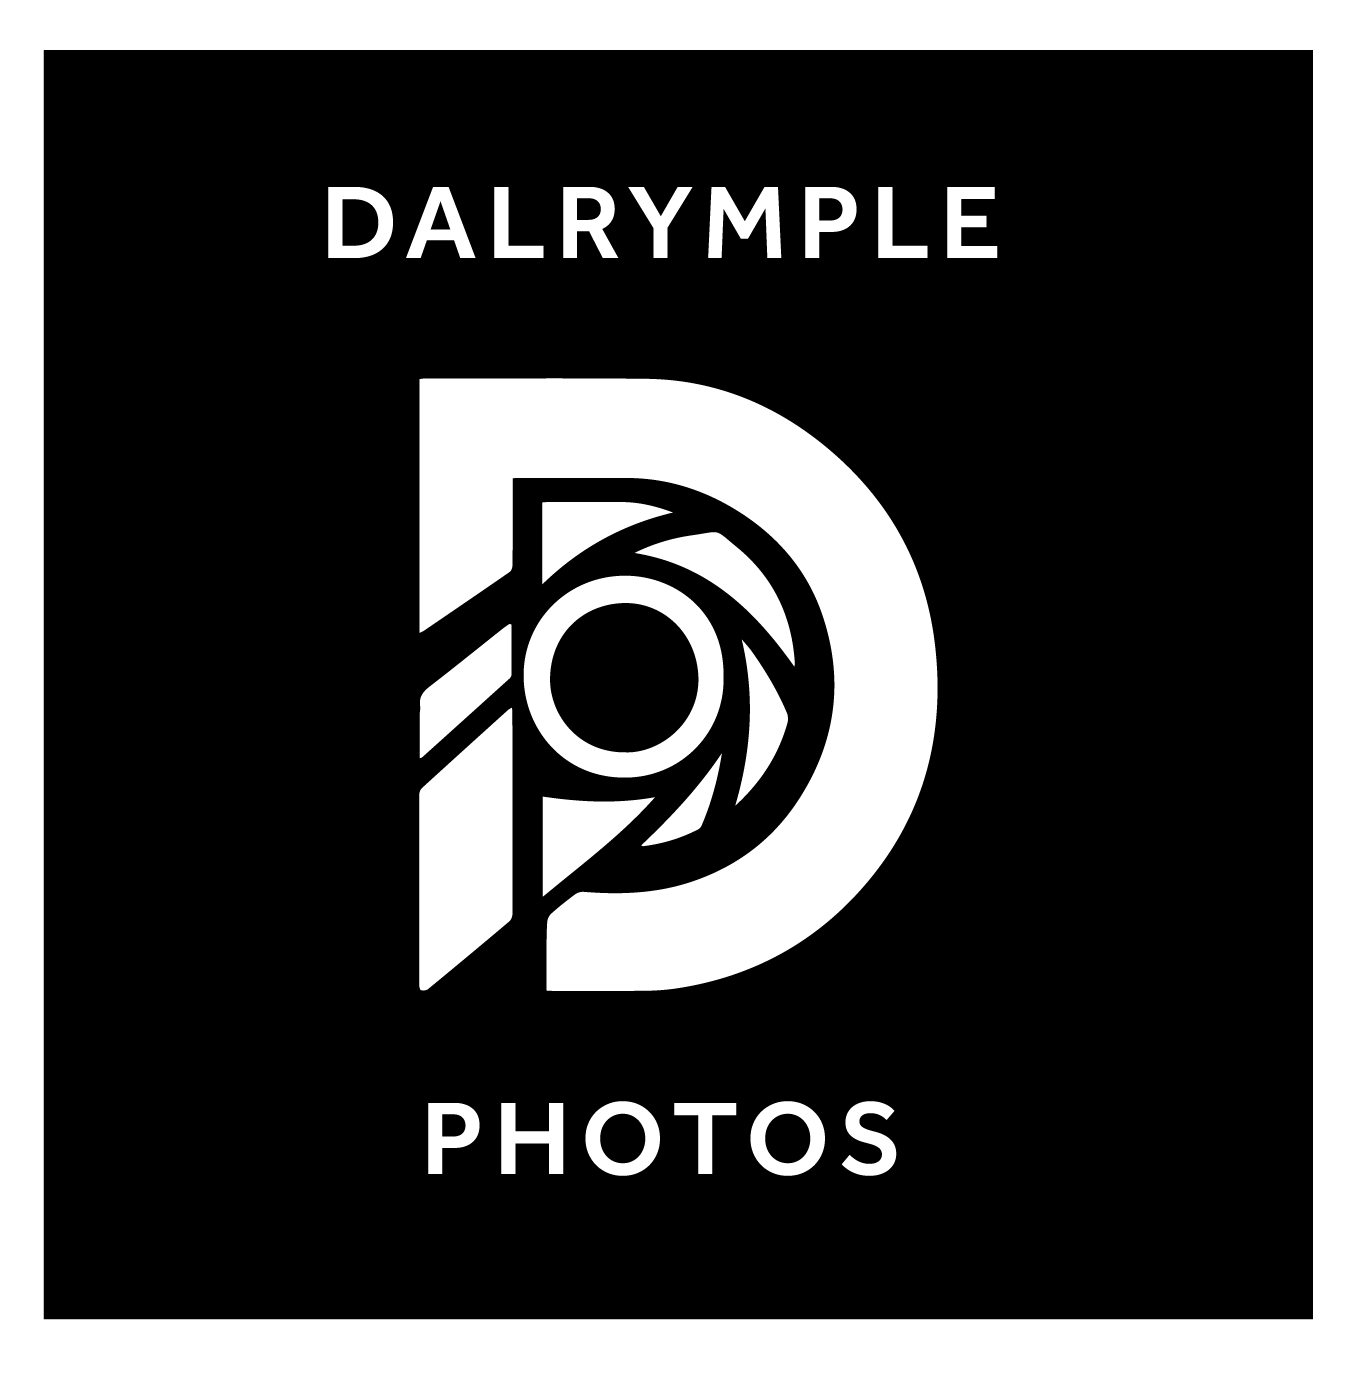 Dalrymple Photos